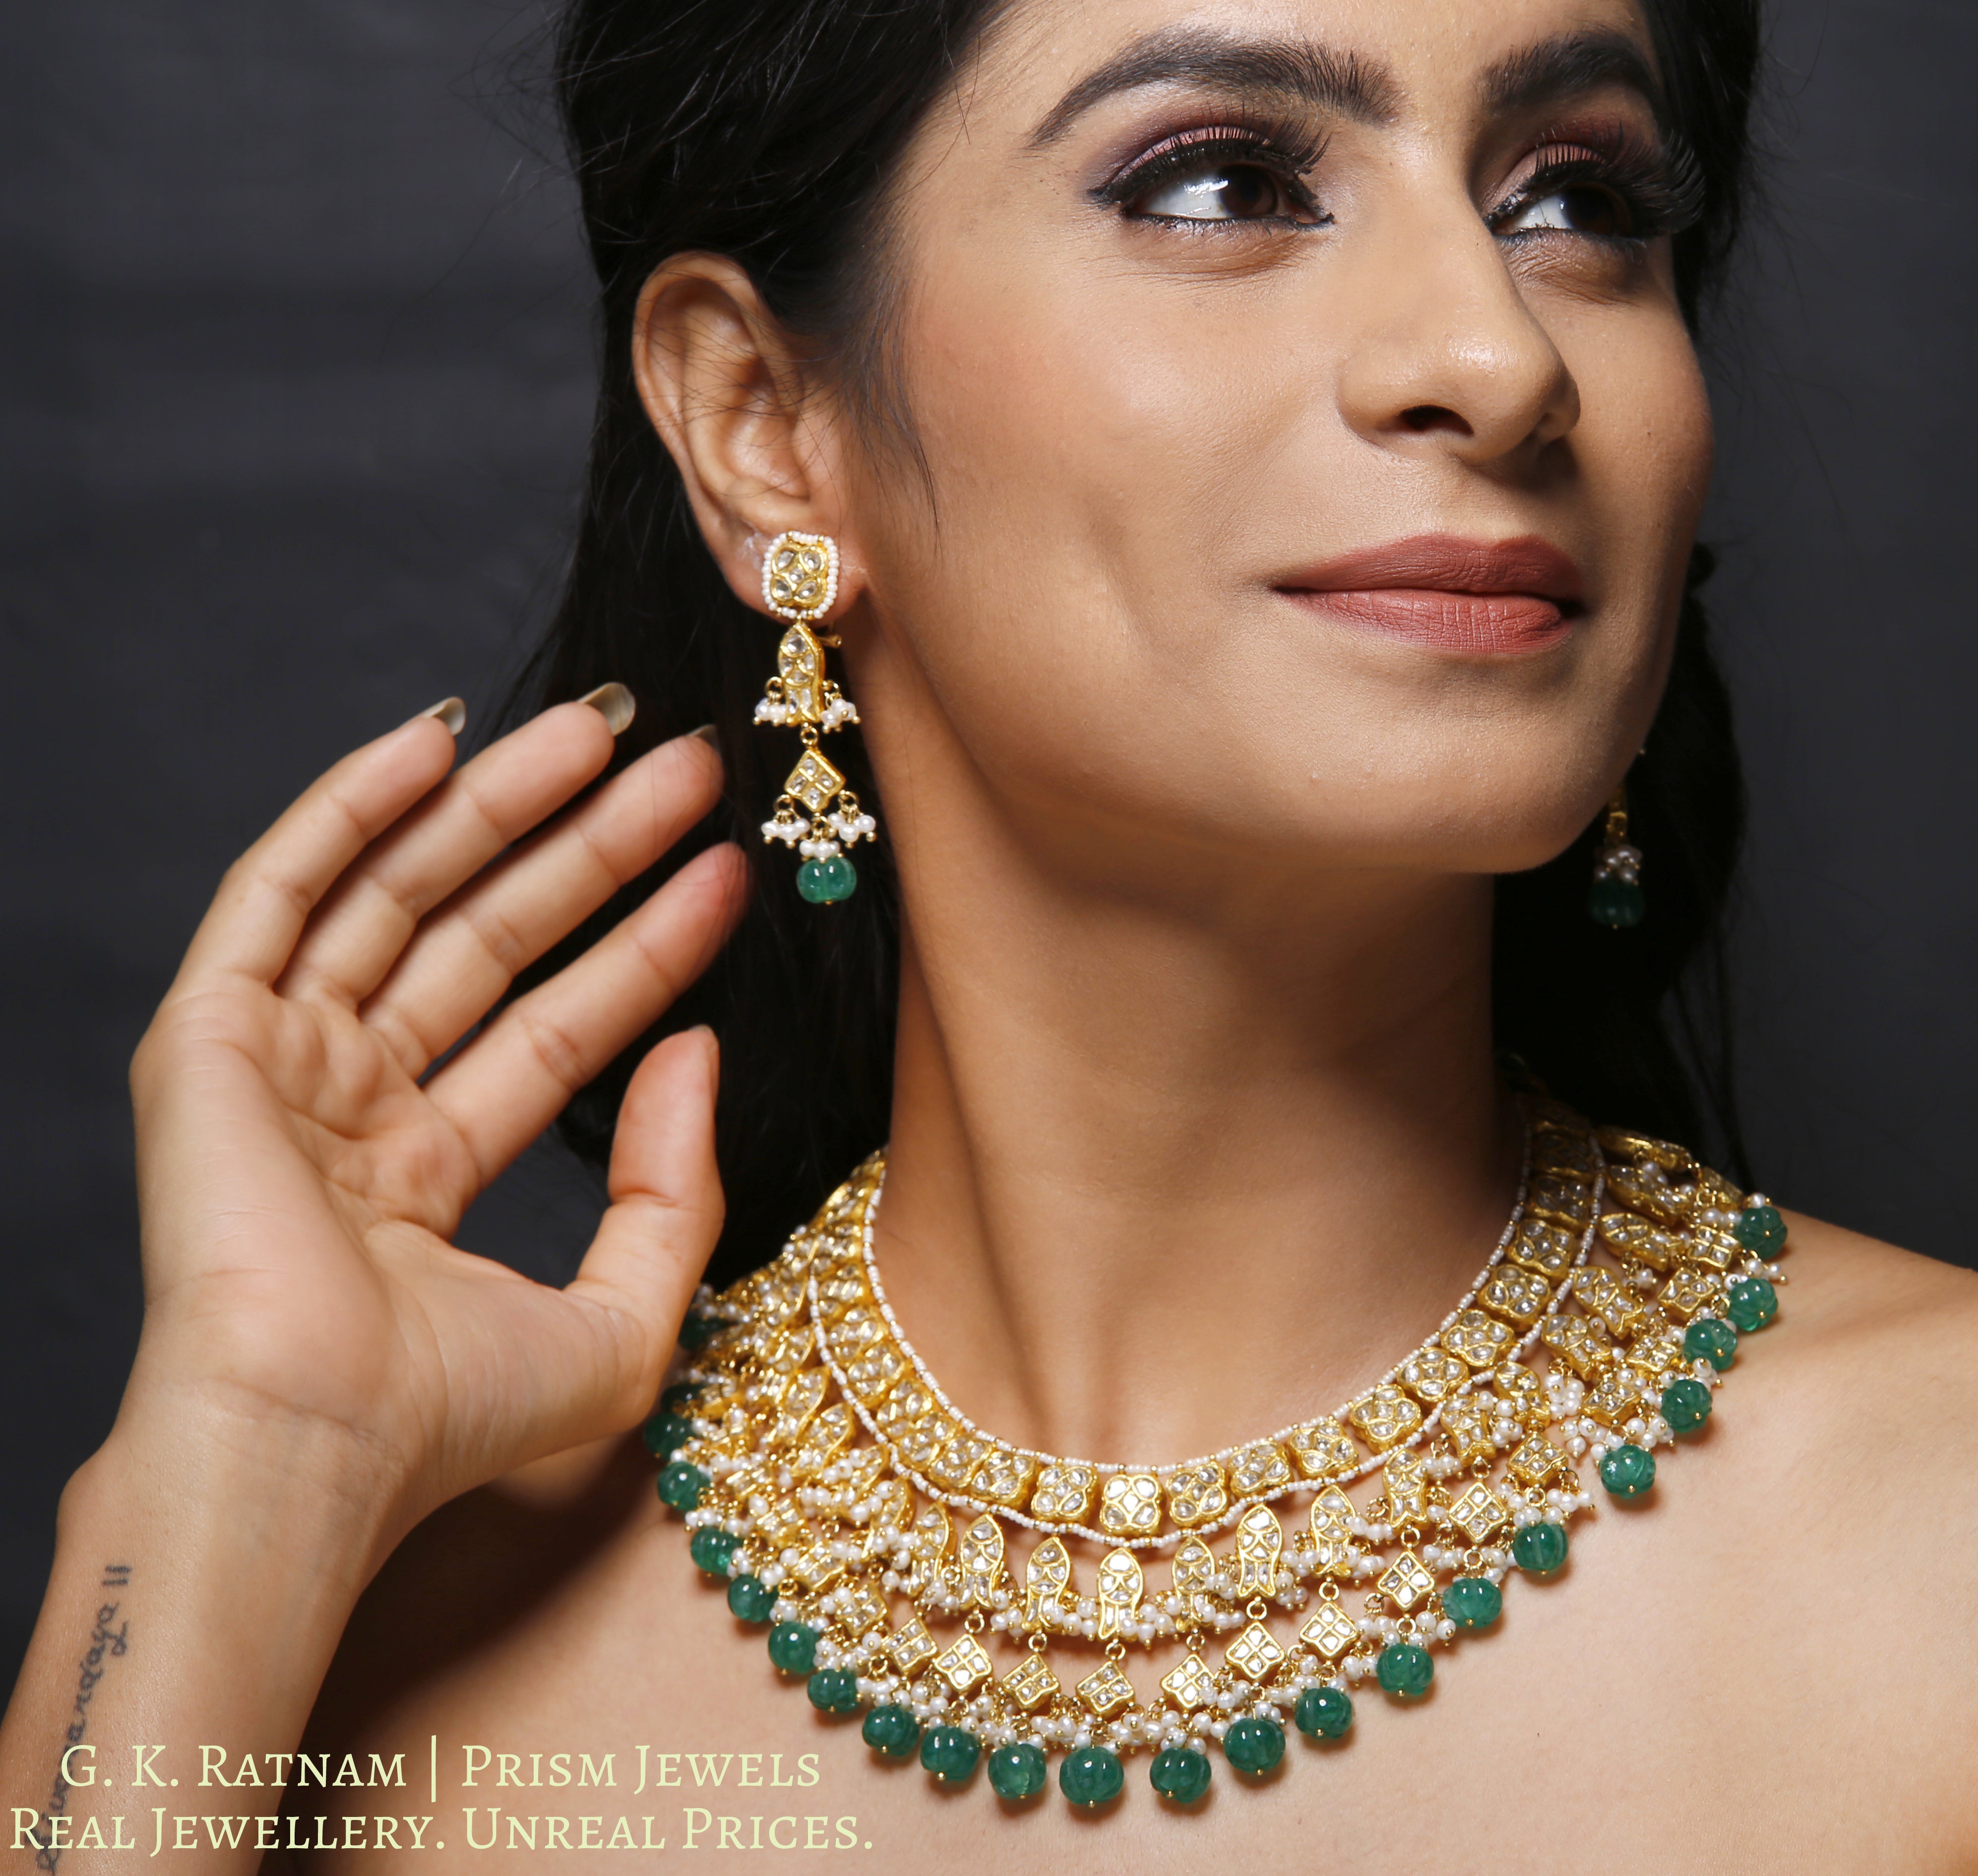 23k Gold and Diamond Polki Necklace Set with fishes and emerald-green melon shaped beads - gold diamond polki kundan meena jadau jewellery